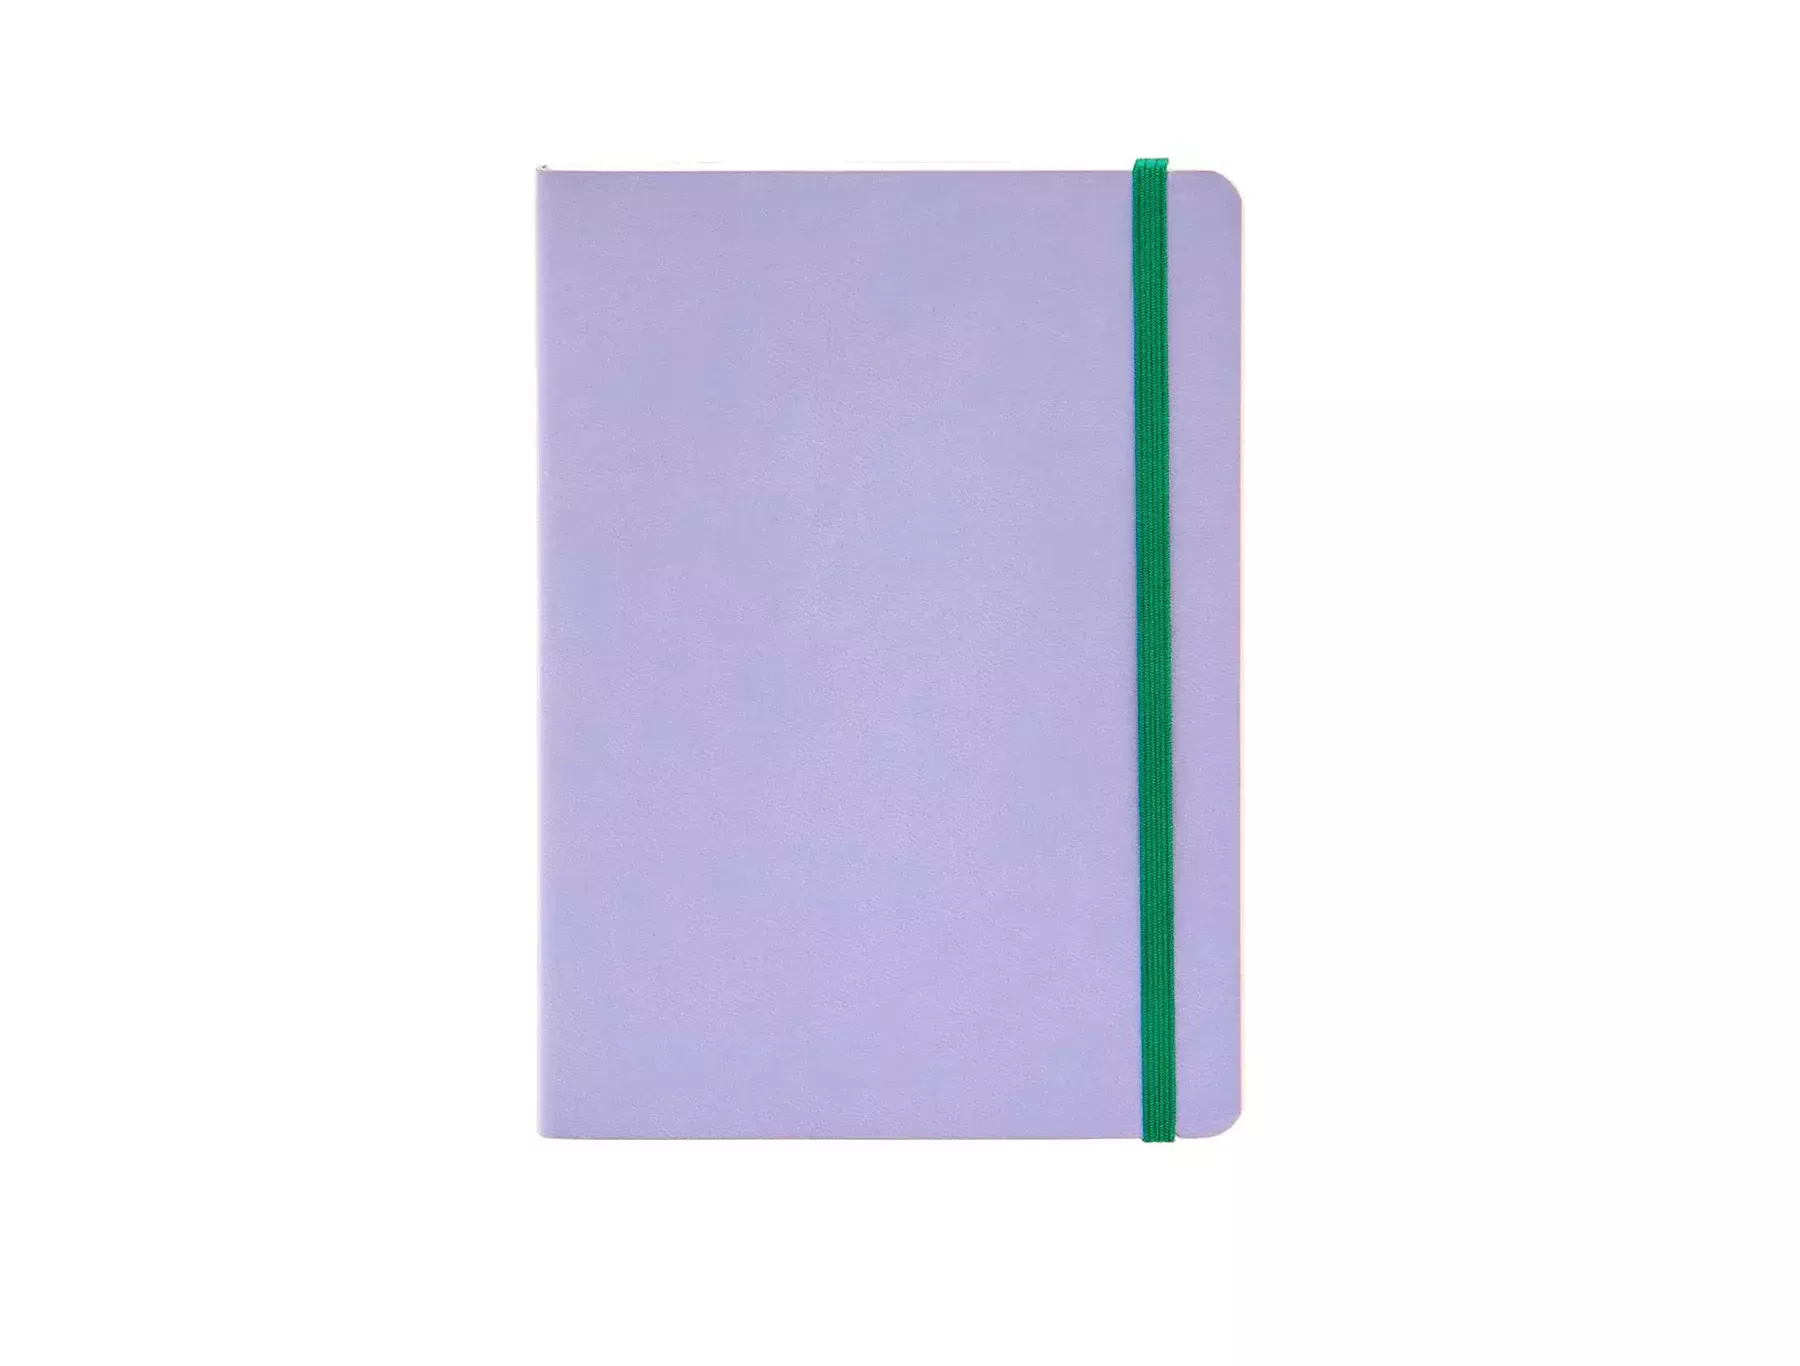 Notebook Funky Piccolo senza righe